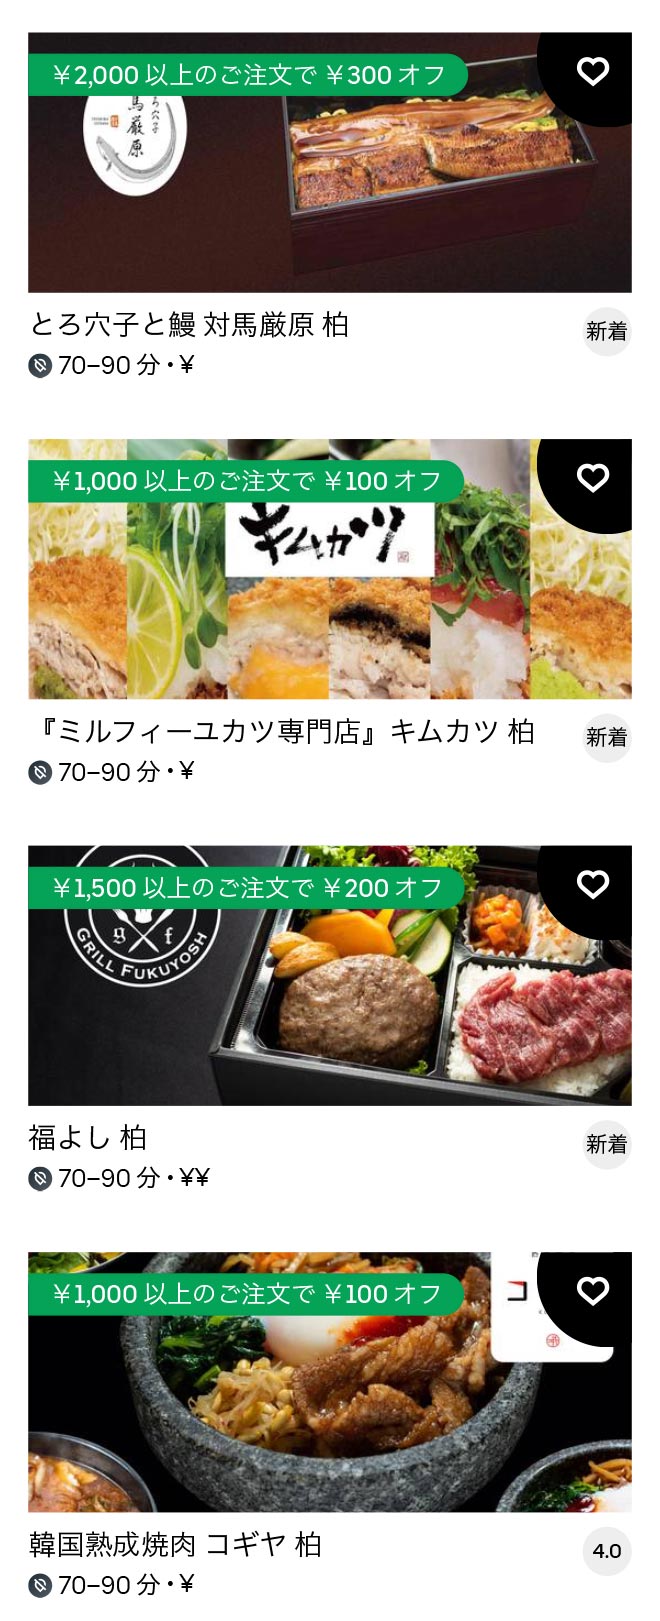 Abiko menu 2011 08